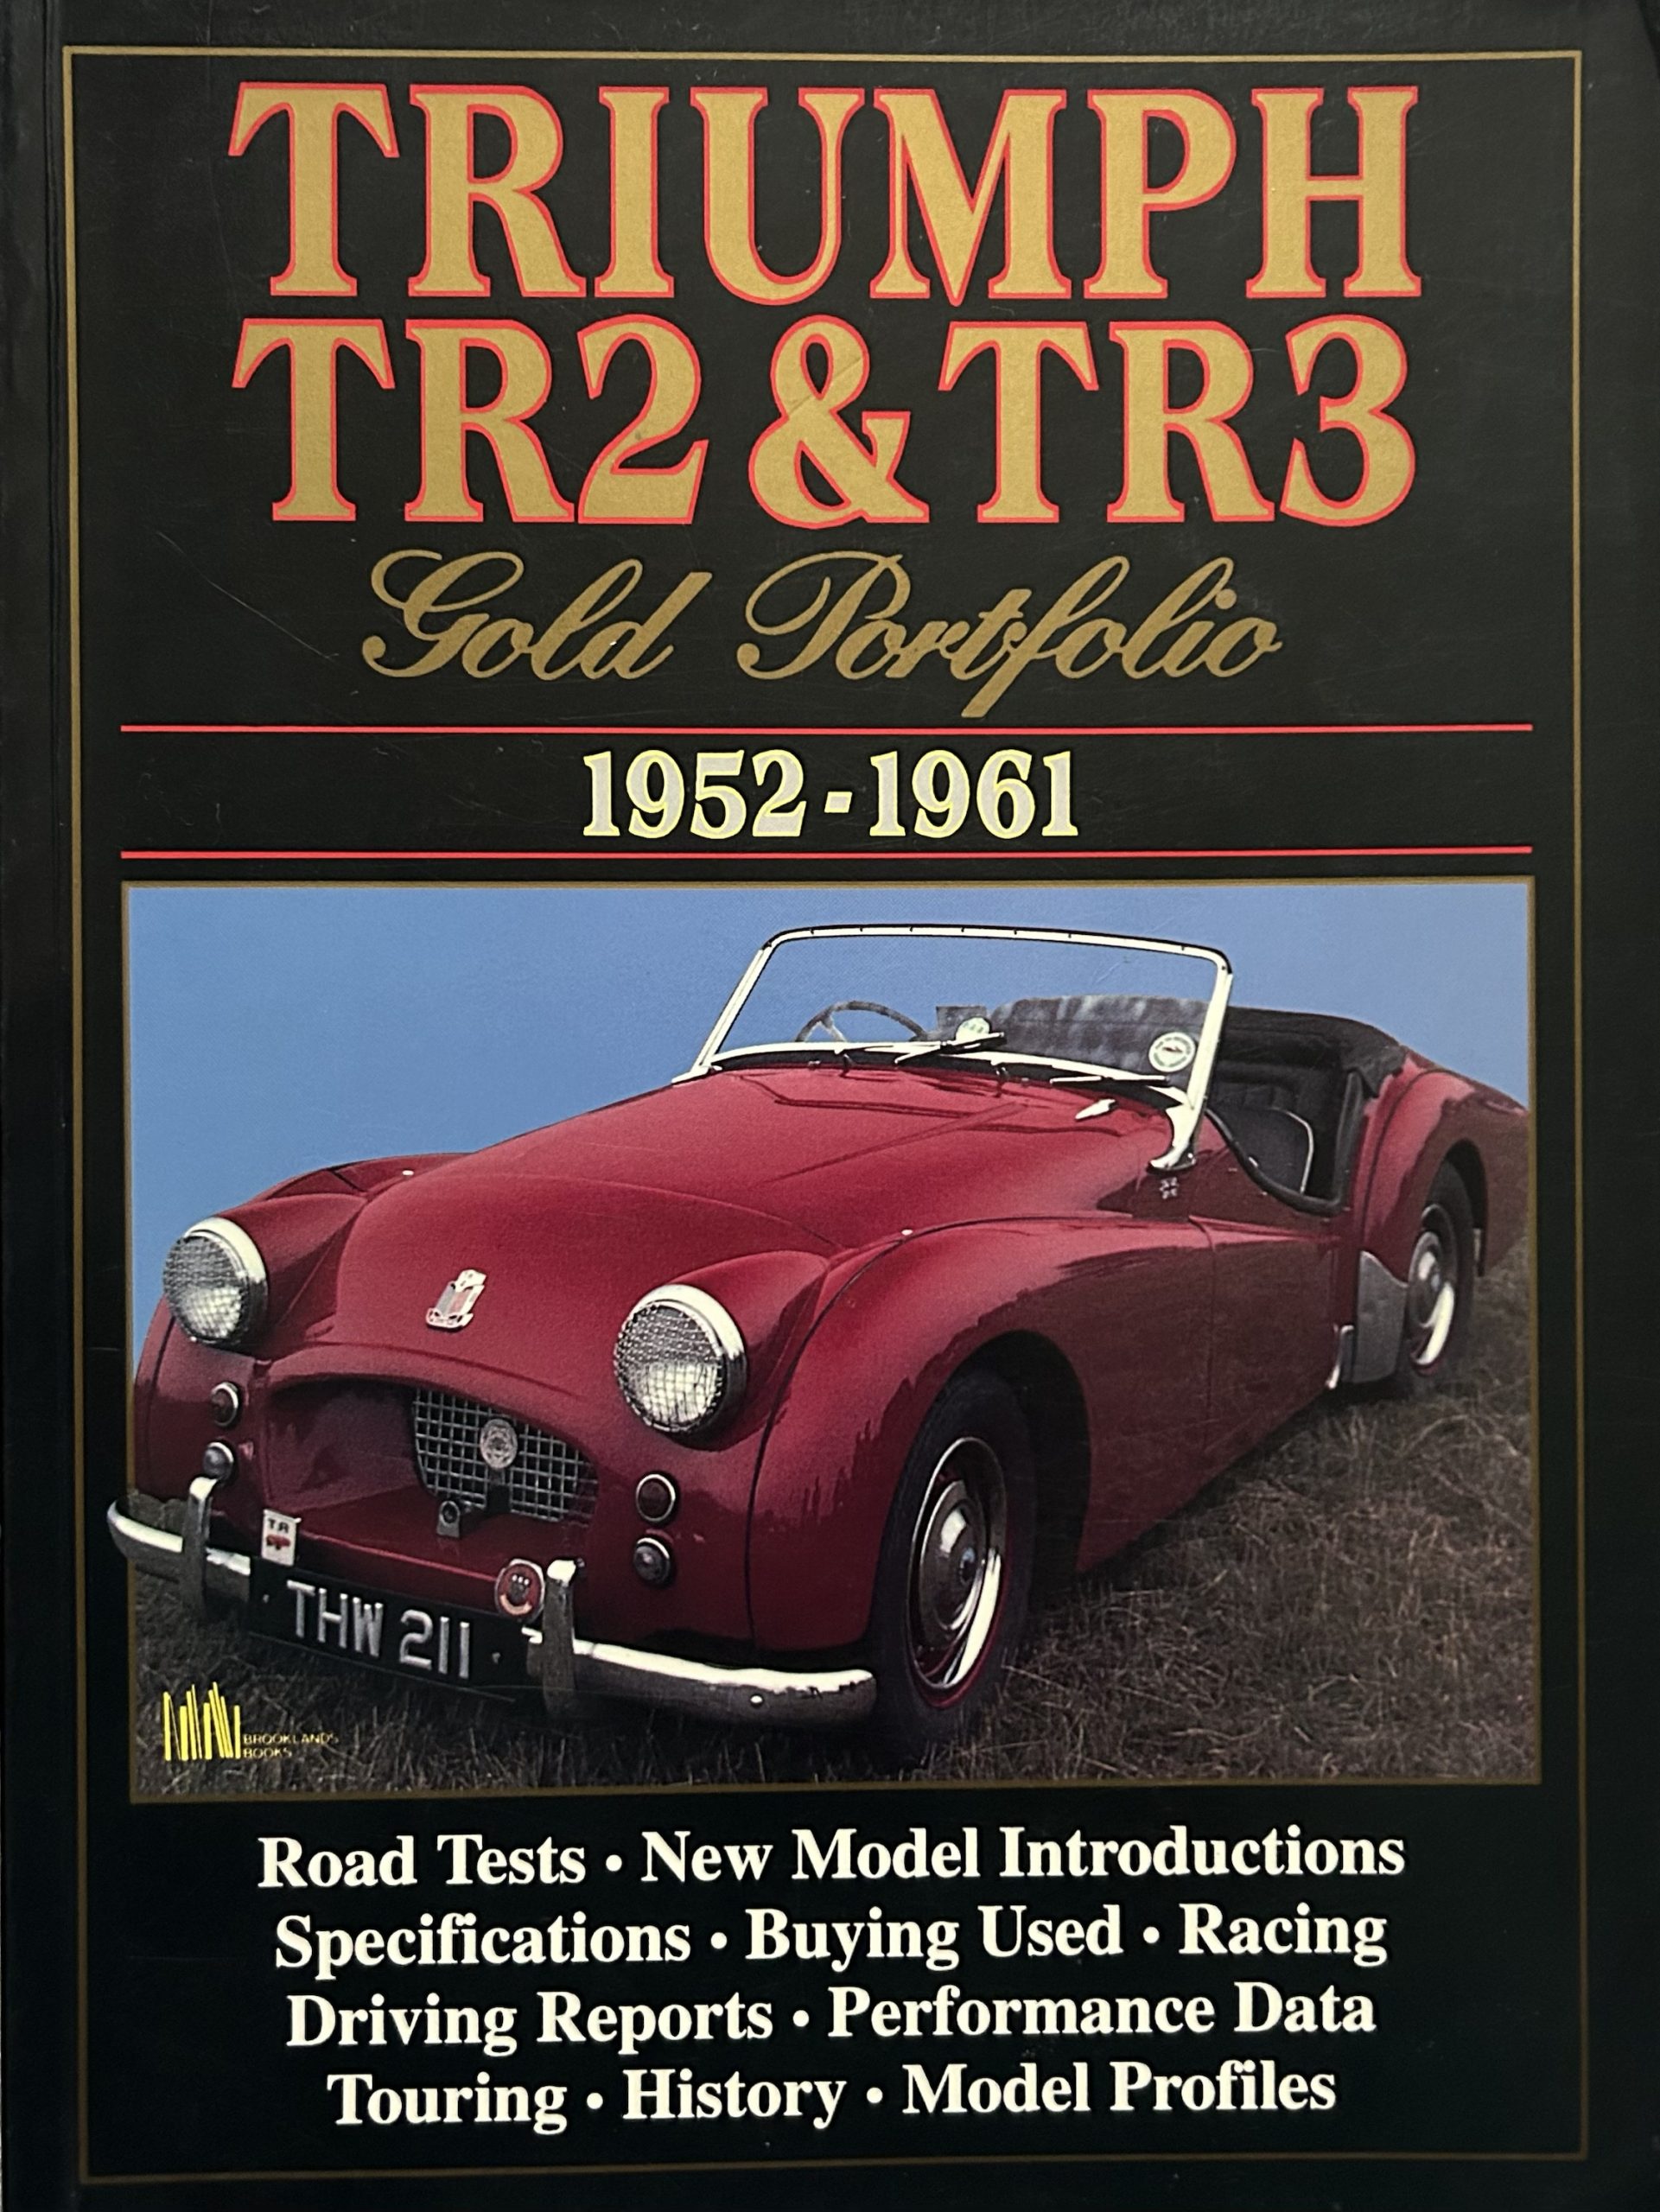 Triumph TR2 & TR3 Gold Portfolio 1952-1961 by R. M. Clarke